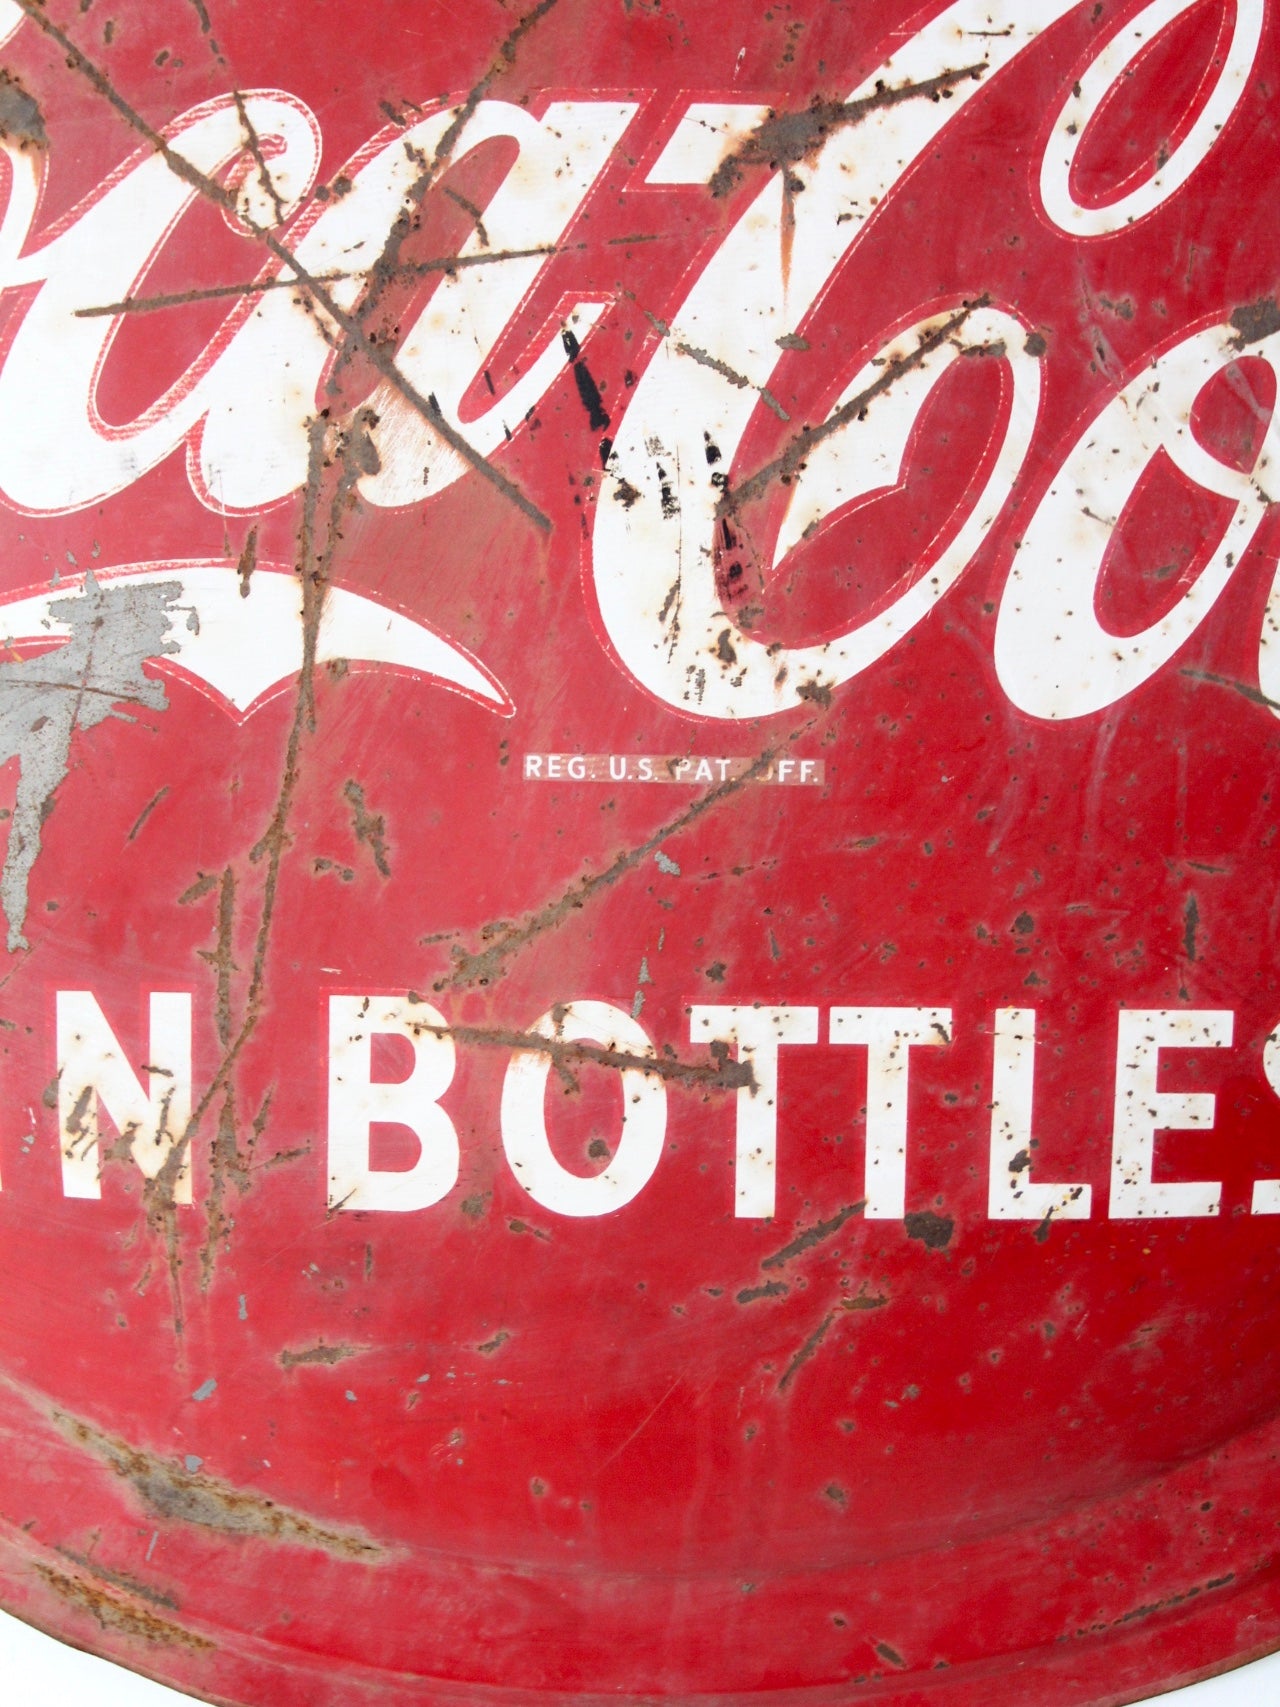 Coca-Cola sign circa 1950s